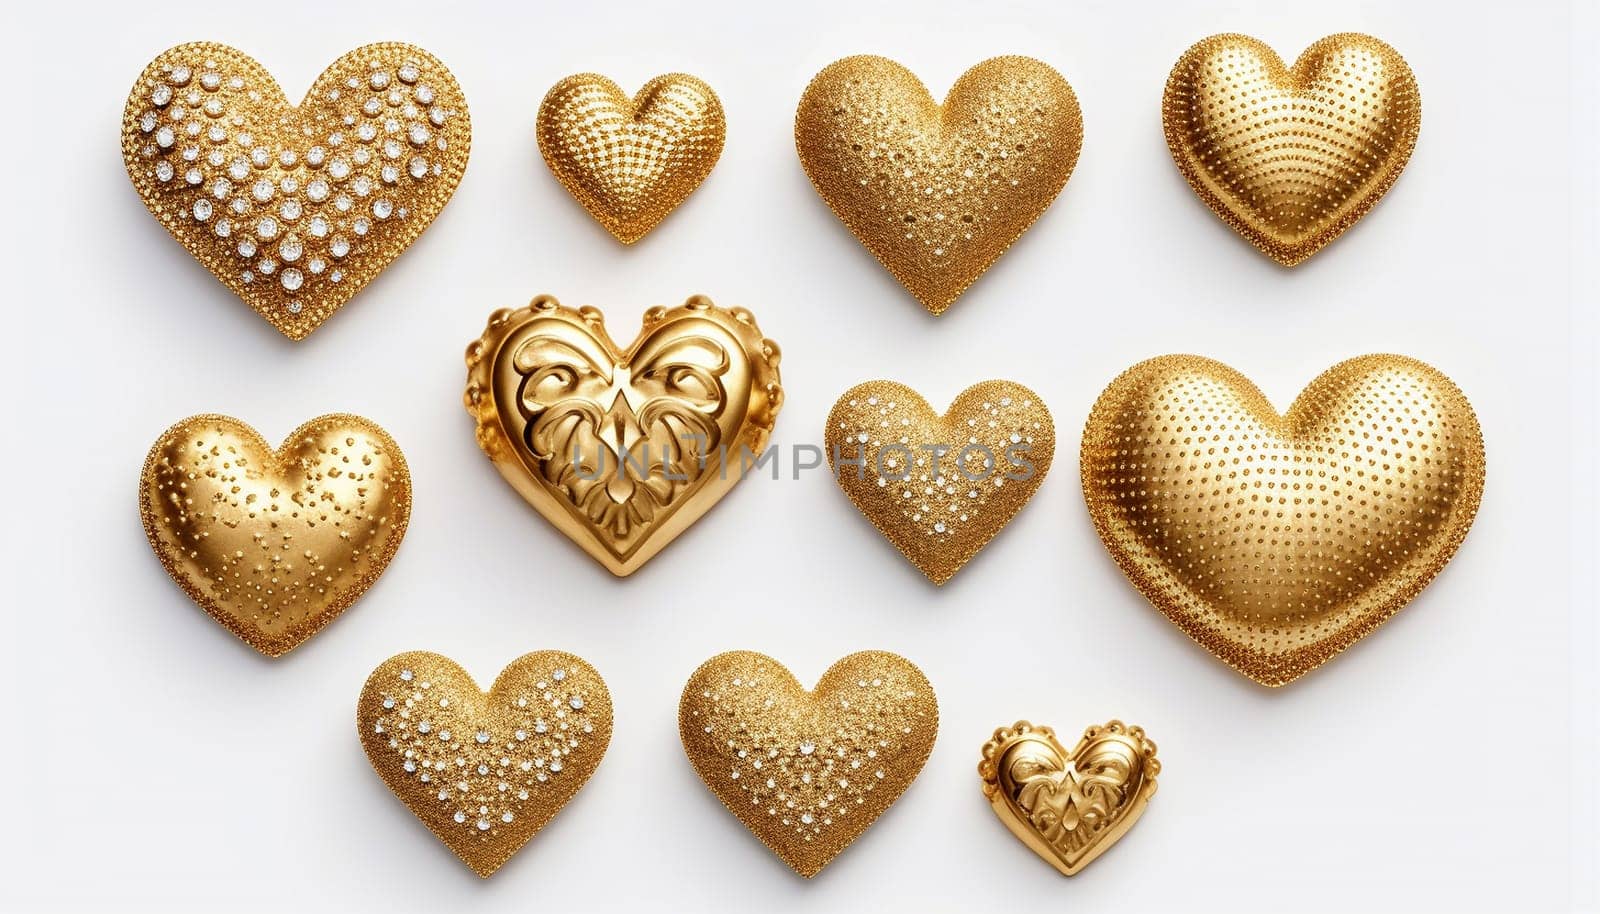 Golden realistic heart. 3D illustration of metal heart shaped. Golden glittering heart shape isolated on white background. Sparkling diamond by Annebel146